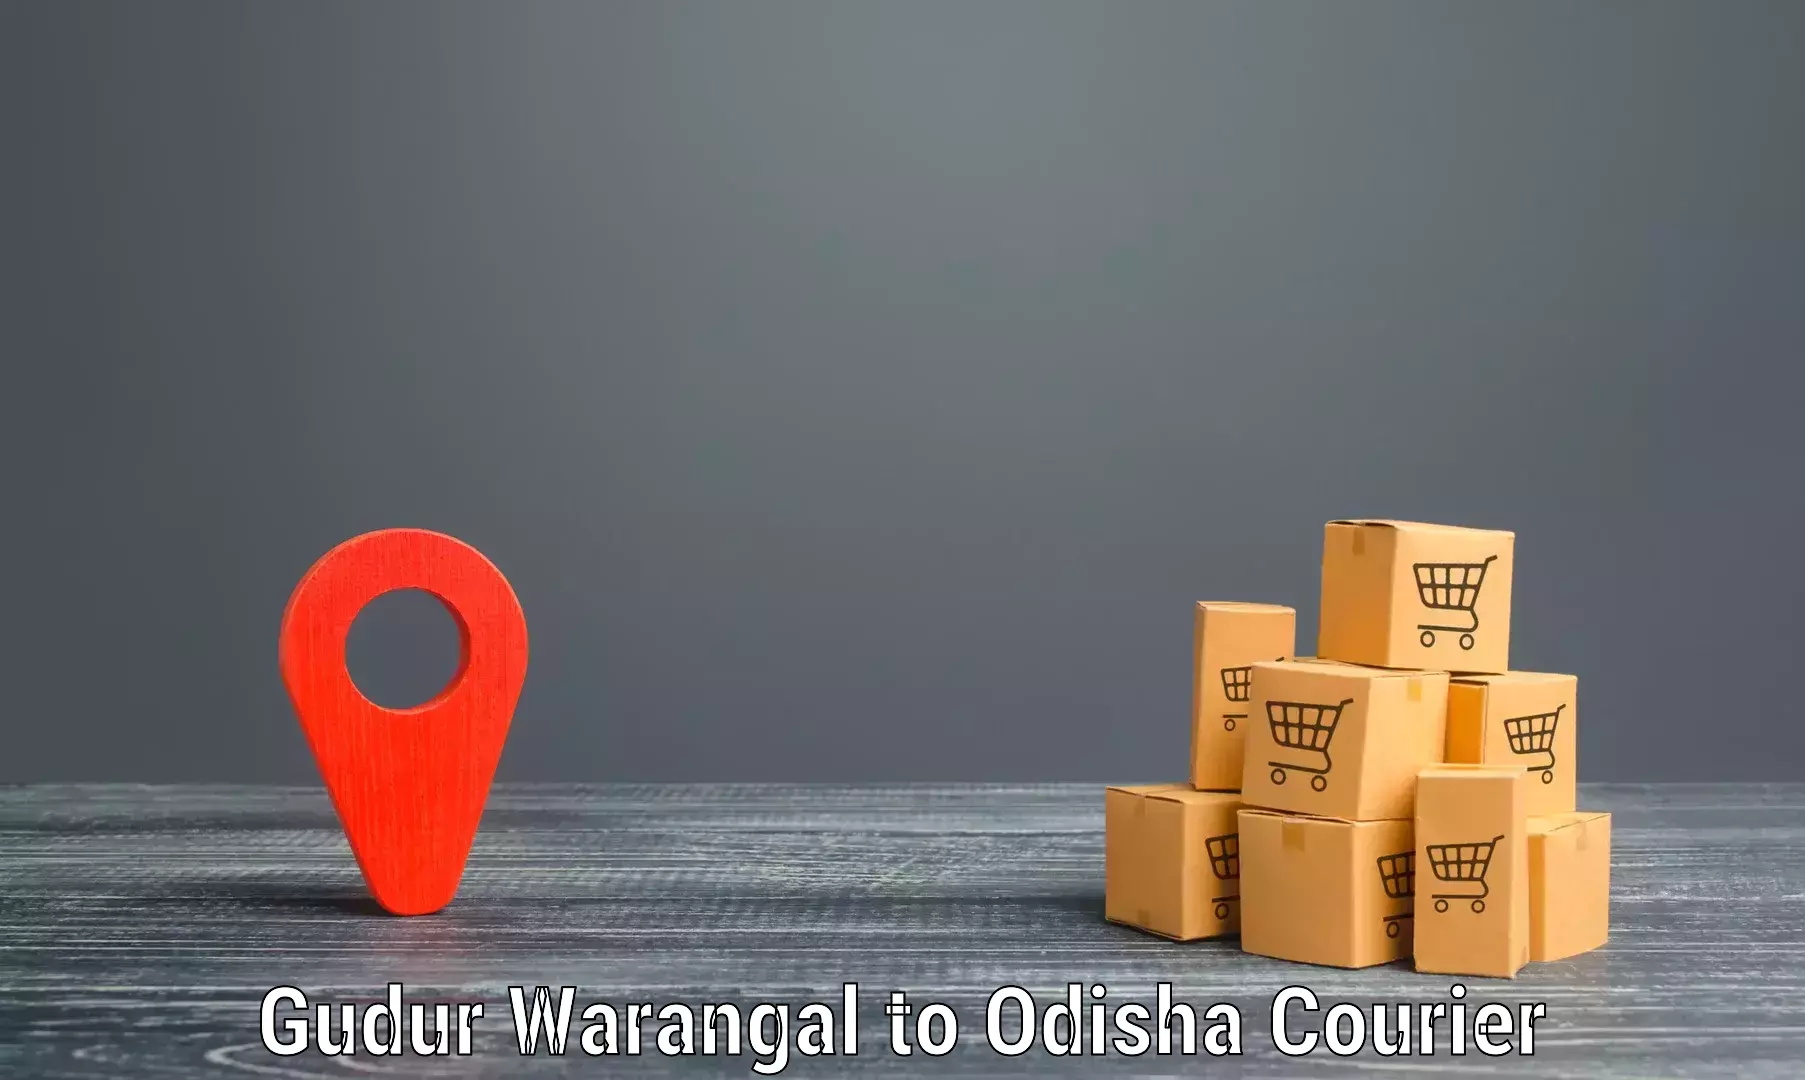 Business shipping needs Gudur Warangal to Gunupur